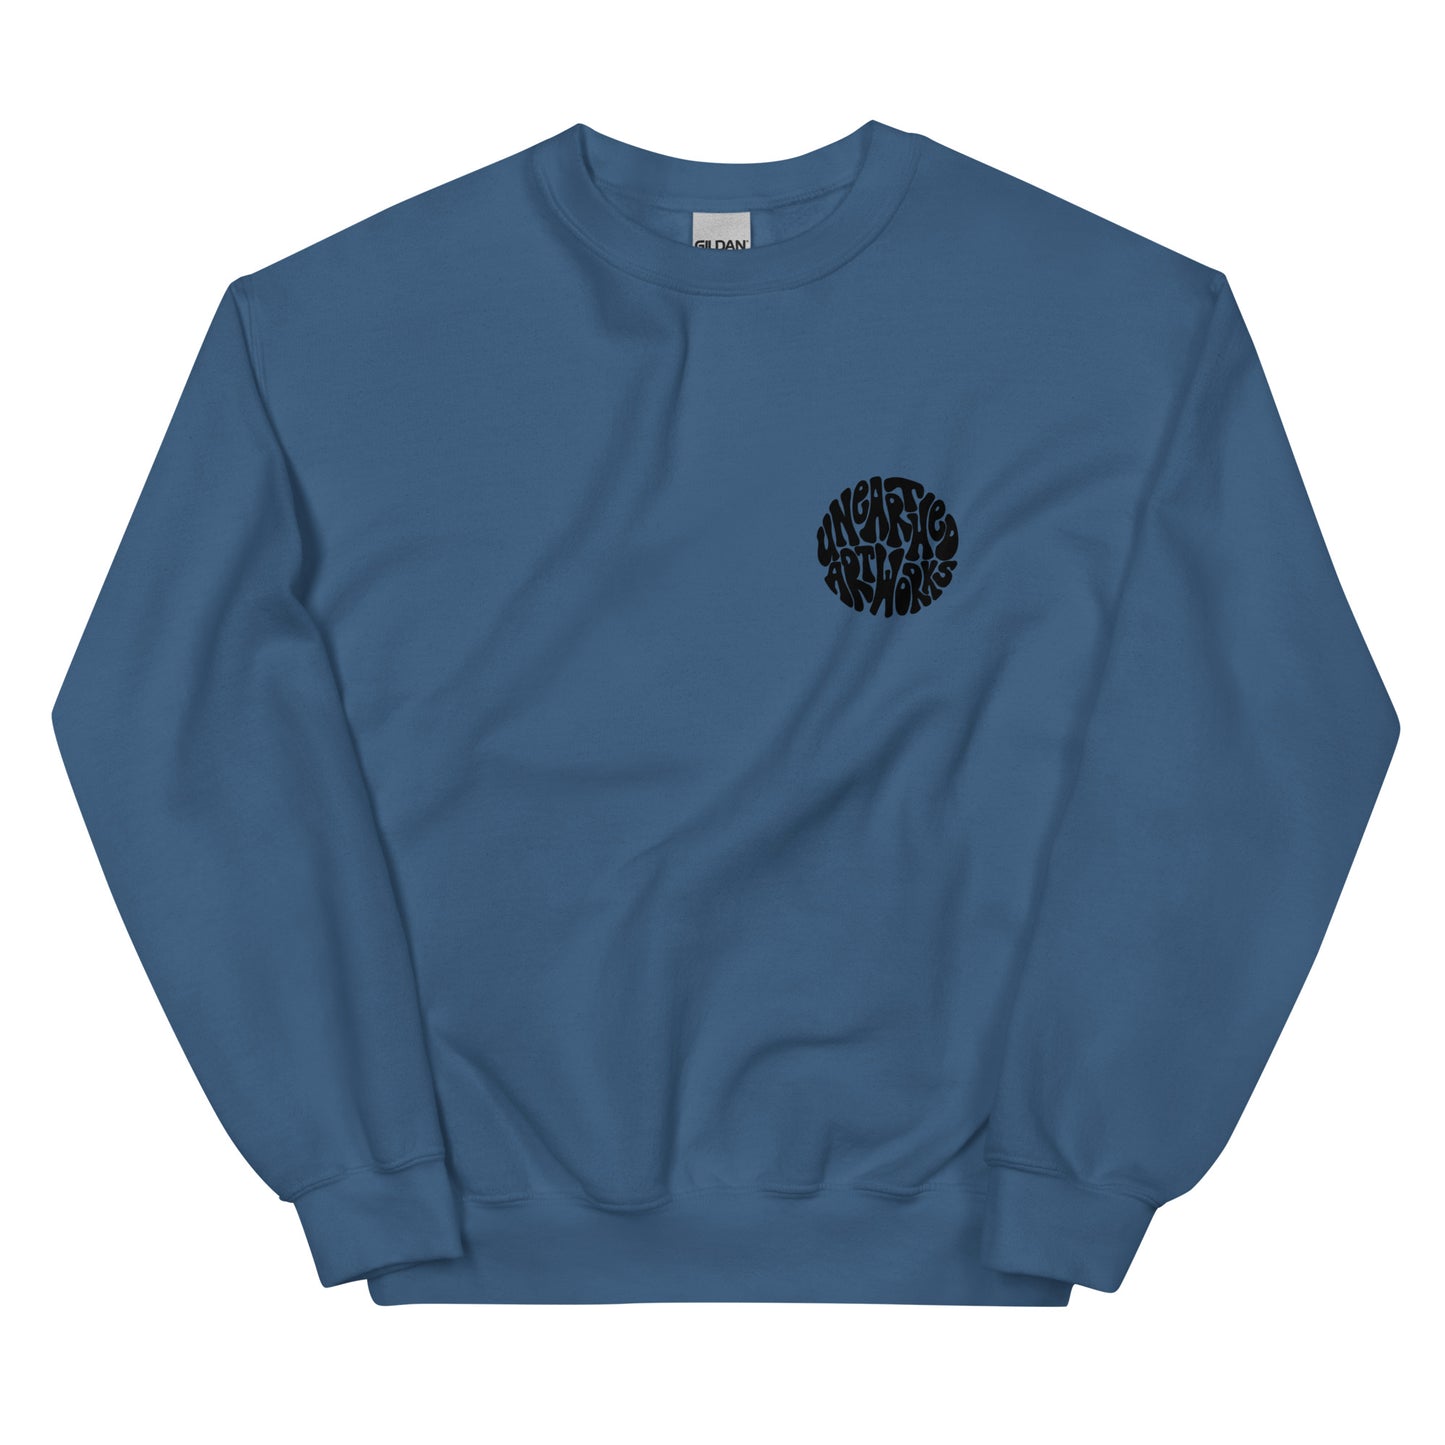 spread good vibes sweatshirt (design on back)